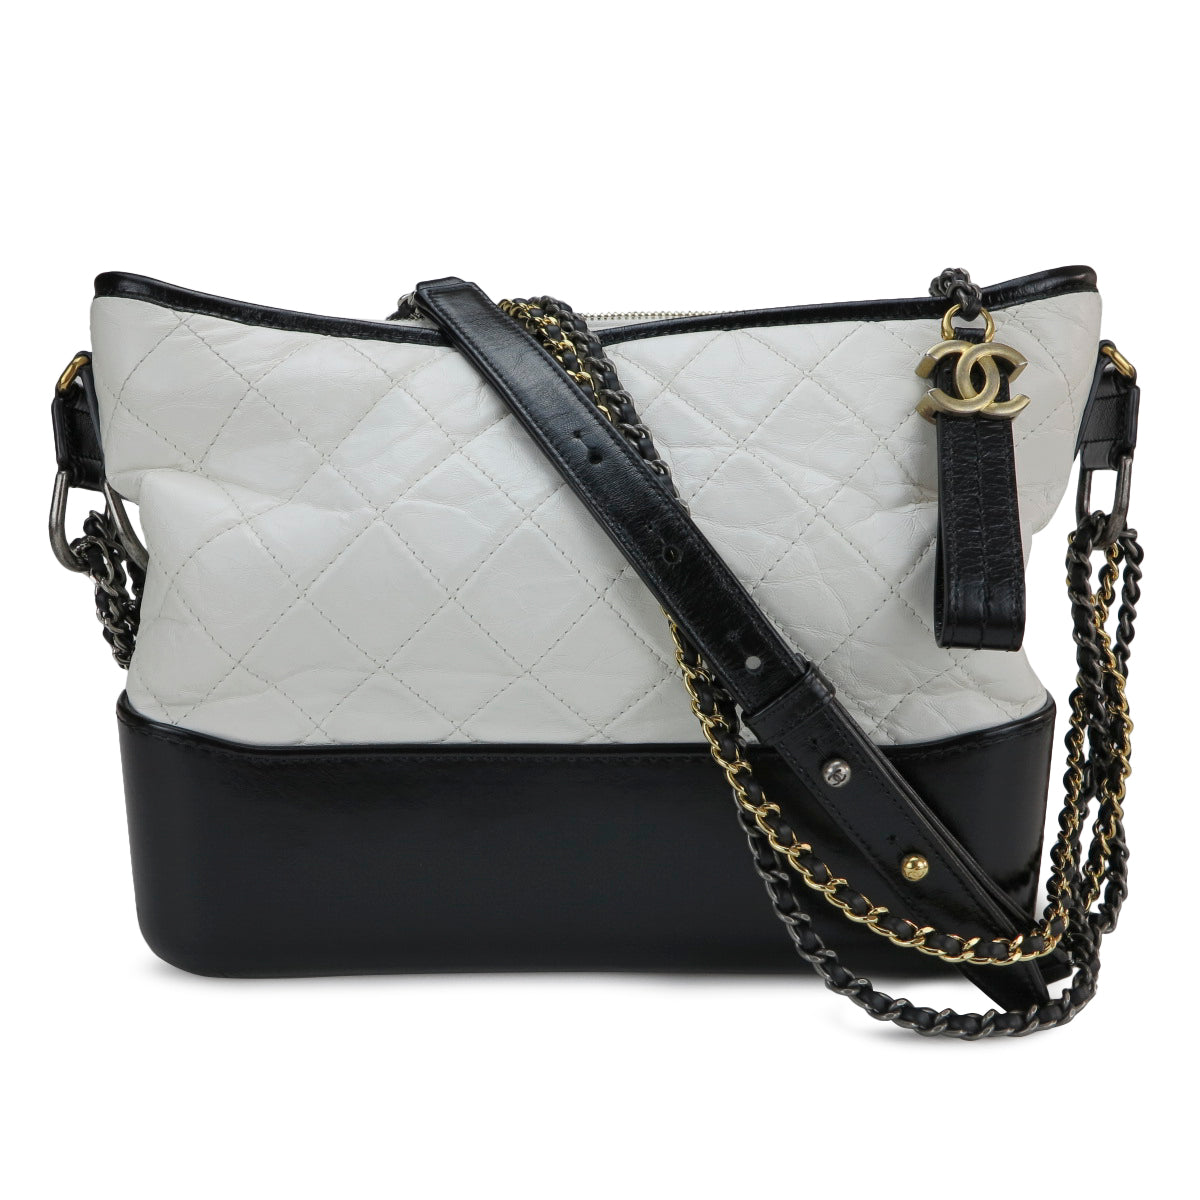 Chanel White and Black Medium Gabrielle Bag in Aged Calfskin